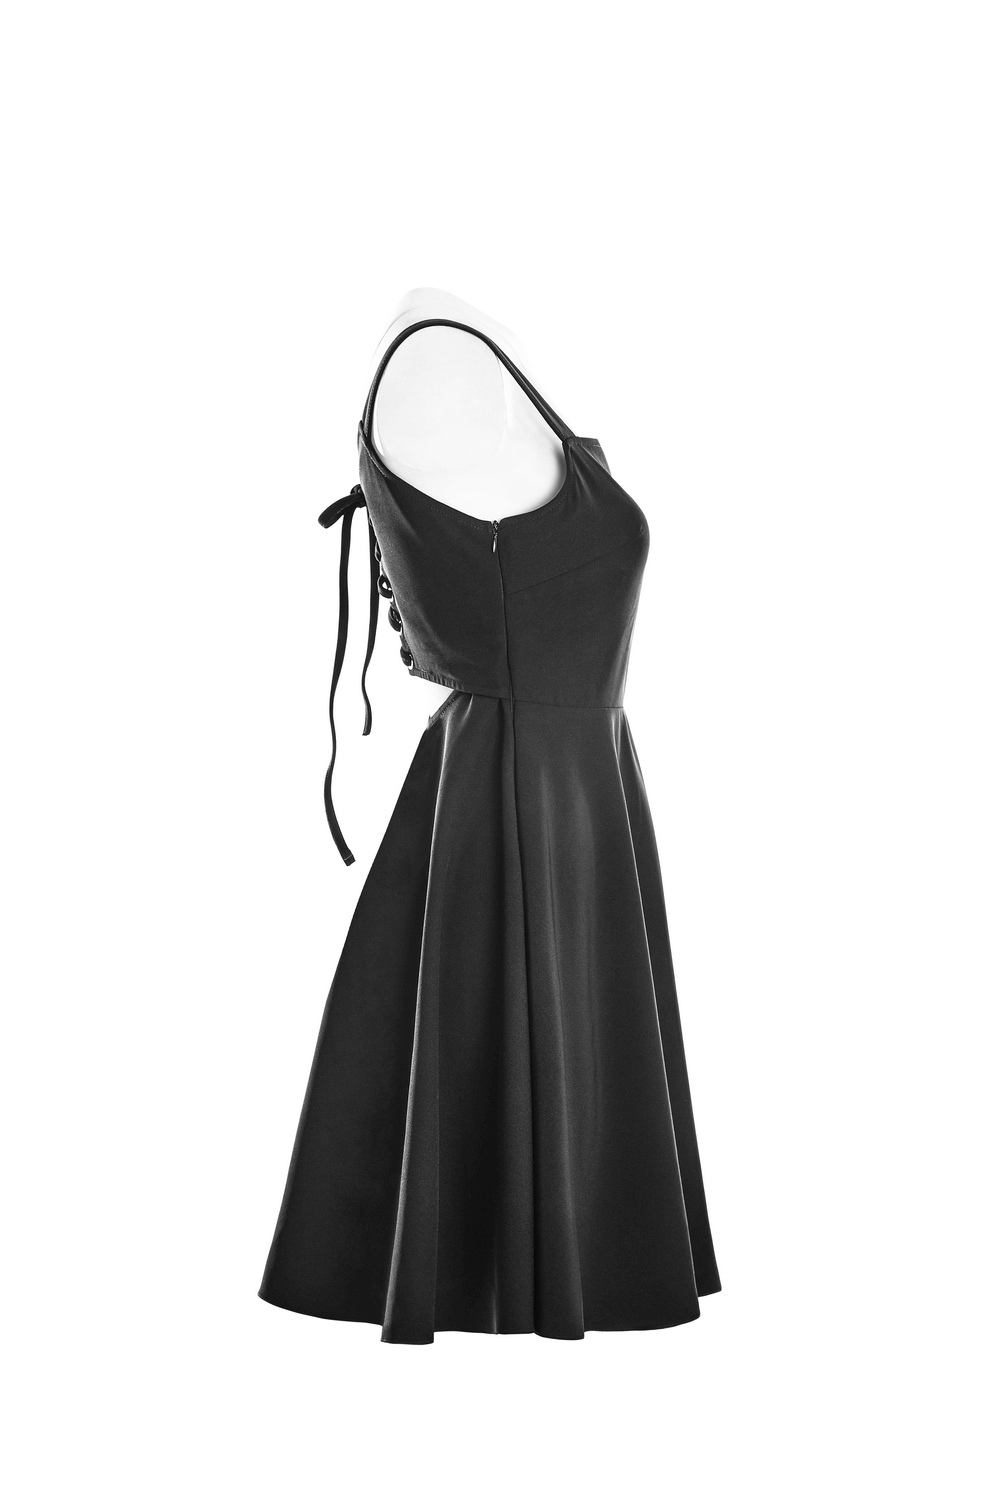 Black Gothic Lace Up Chiffon Dress - Punk Tie Rope Design